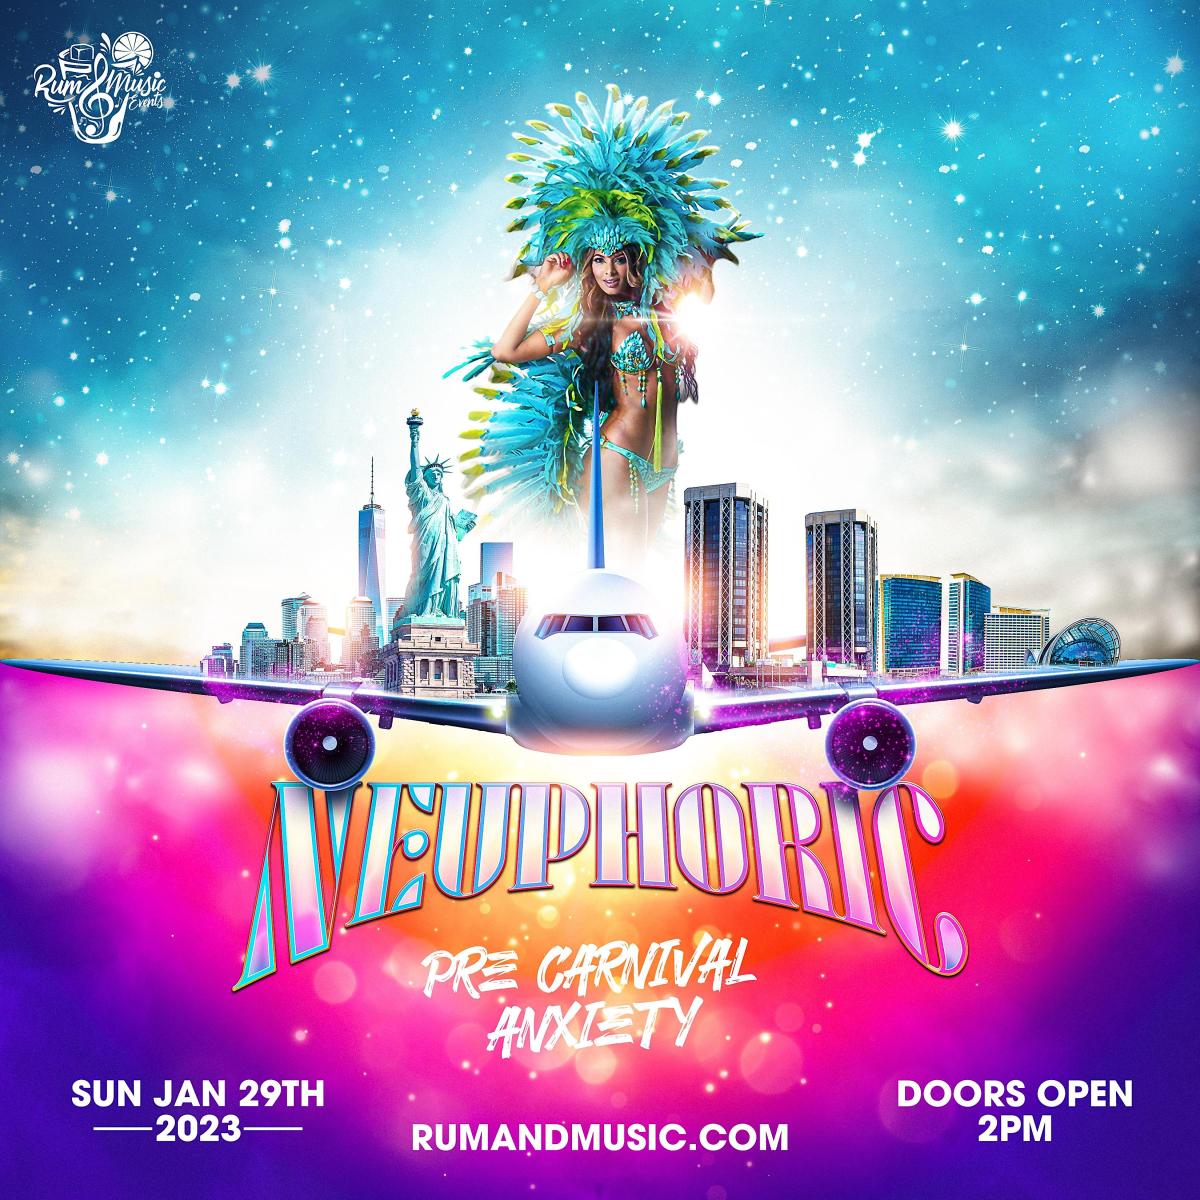 Neuphoric- Trinidad Carnival Sendoff flyer or graphic.